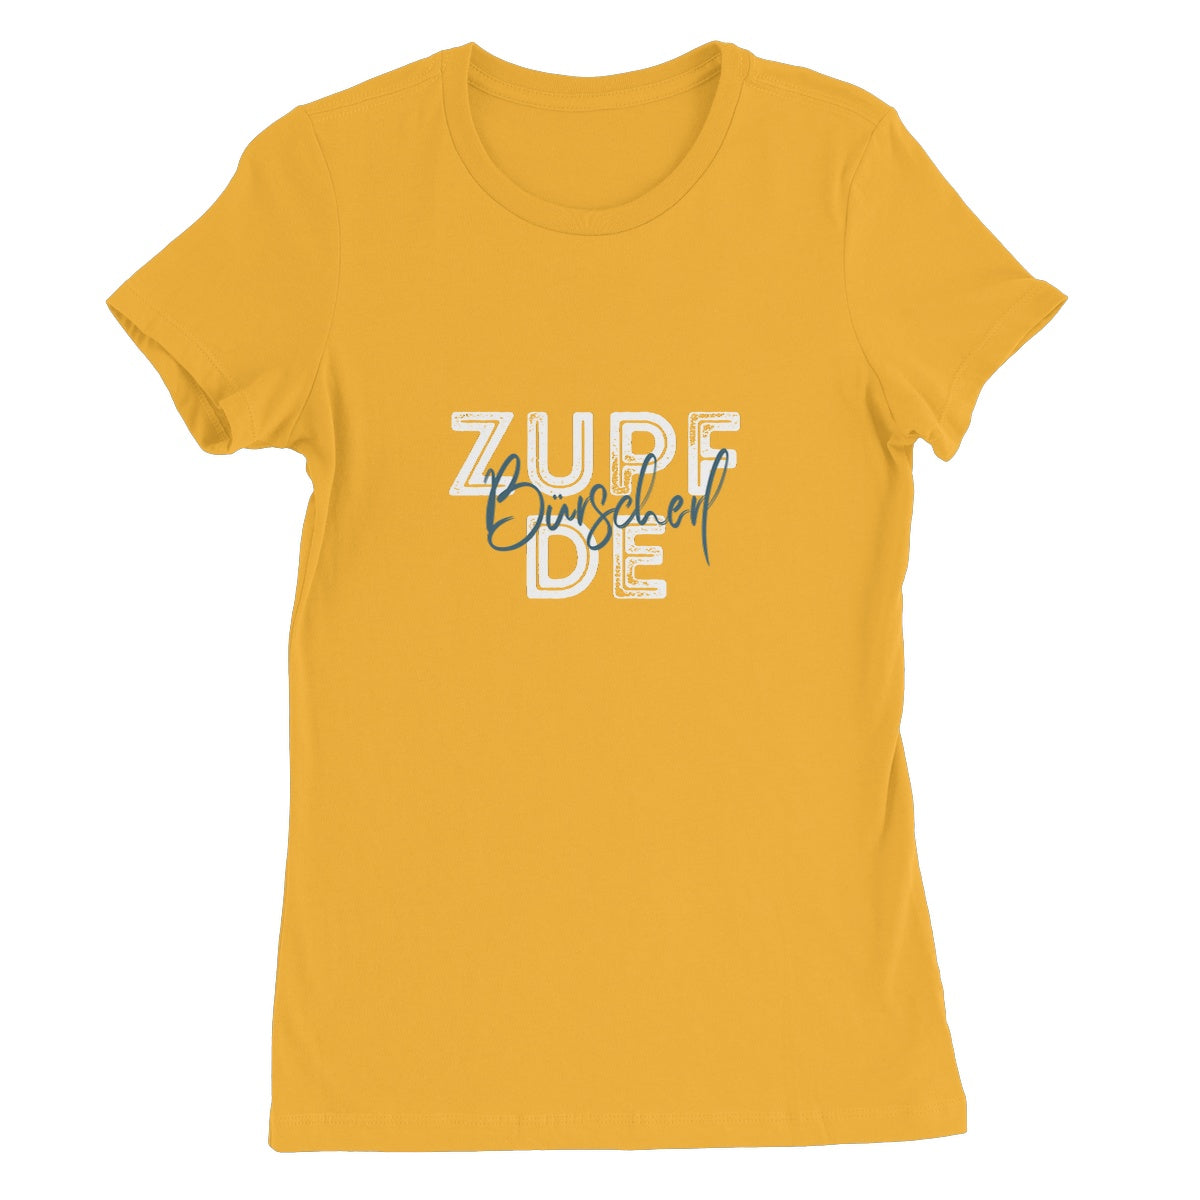 Women's Bavarian Graphic T-Shirt "Zupf de, Burscherl" script print - 4 colours - Bavari Shop - Bavarian Outfits, Dirndl, Lederhosen & Accessories